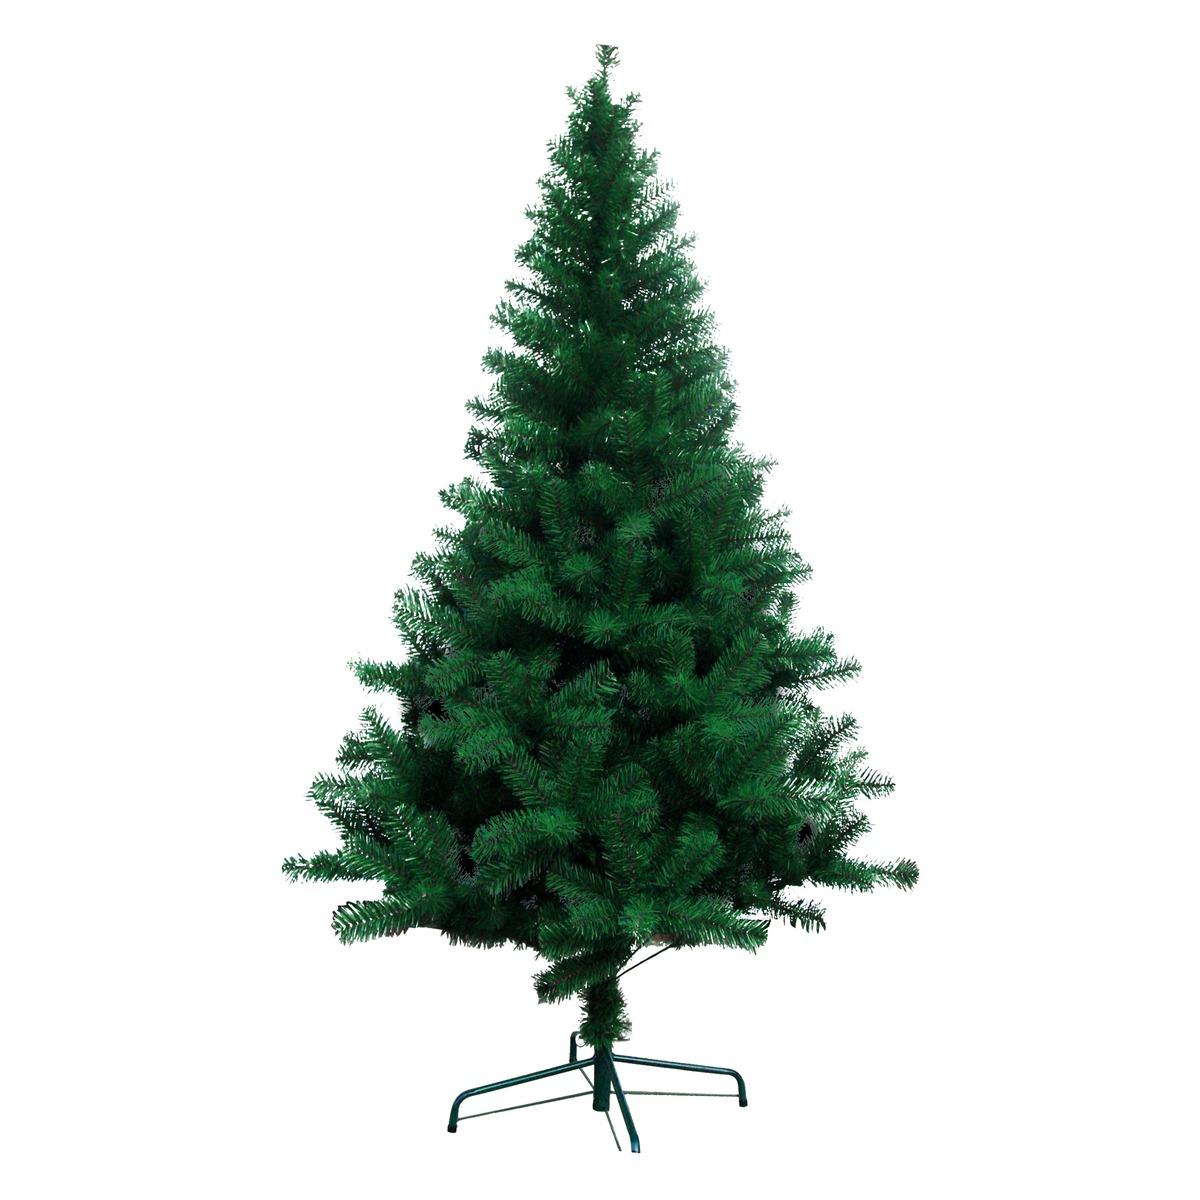 Sapin de Noël en plastique - Hauteur 90 cm - Vert